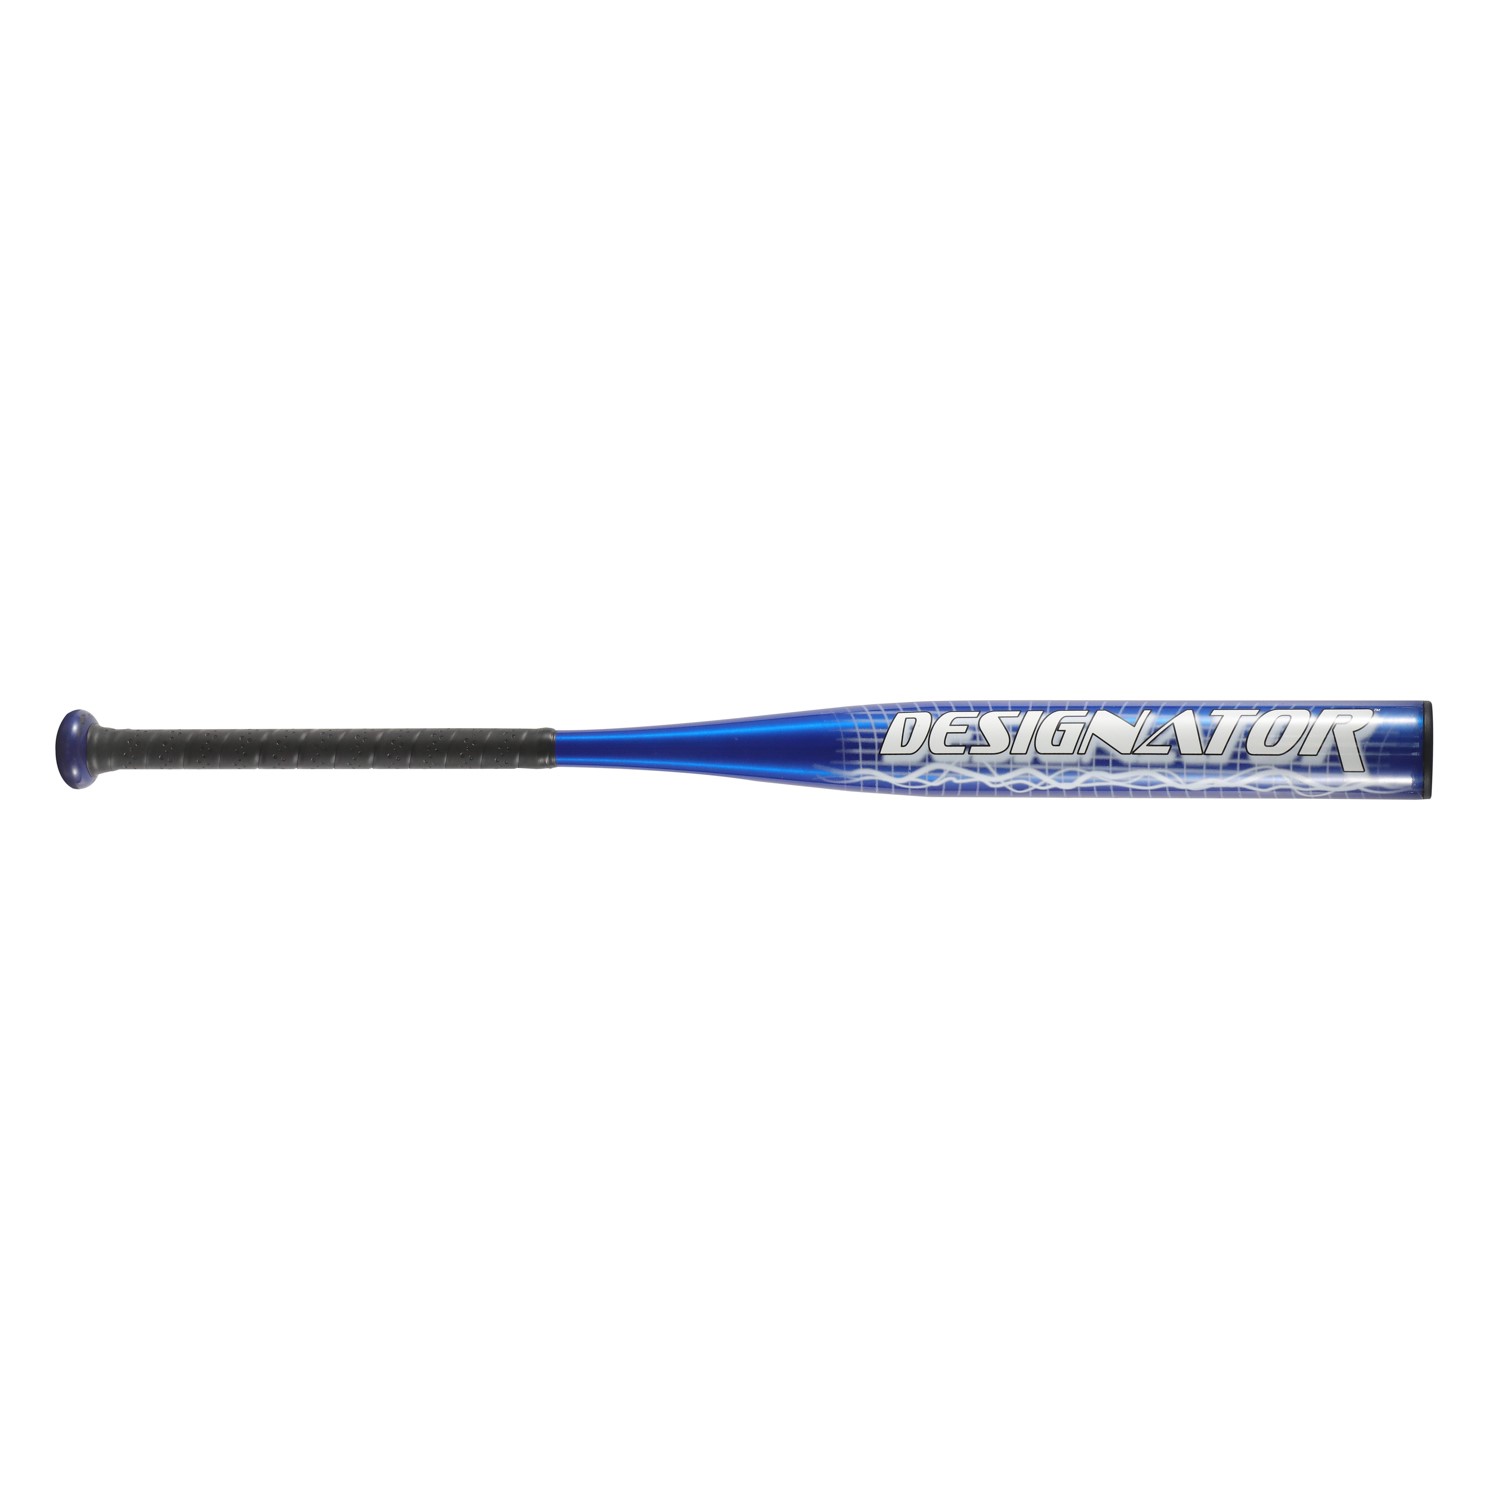 Professional Customized 34inch Softball Bat